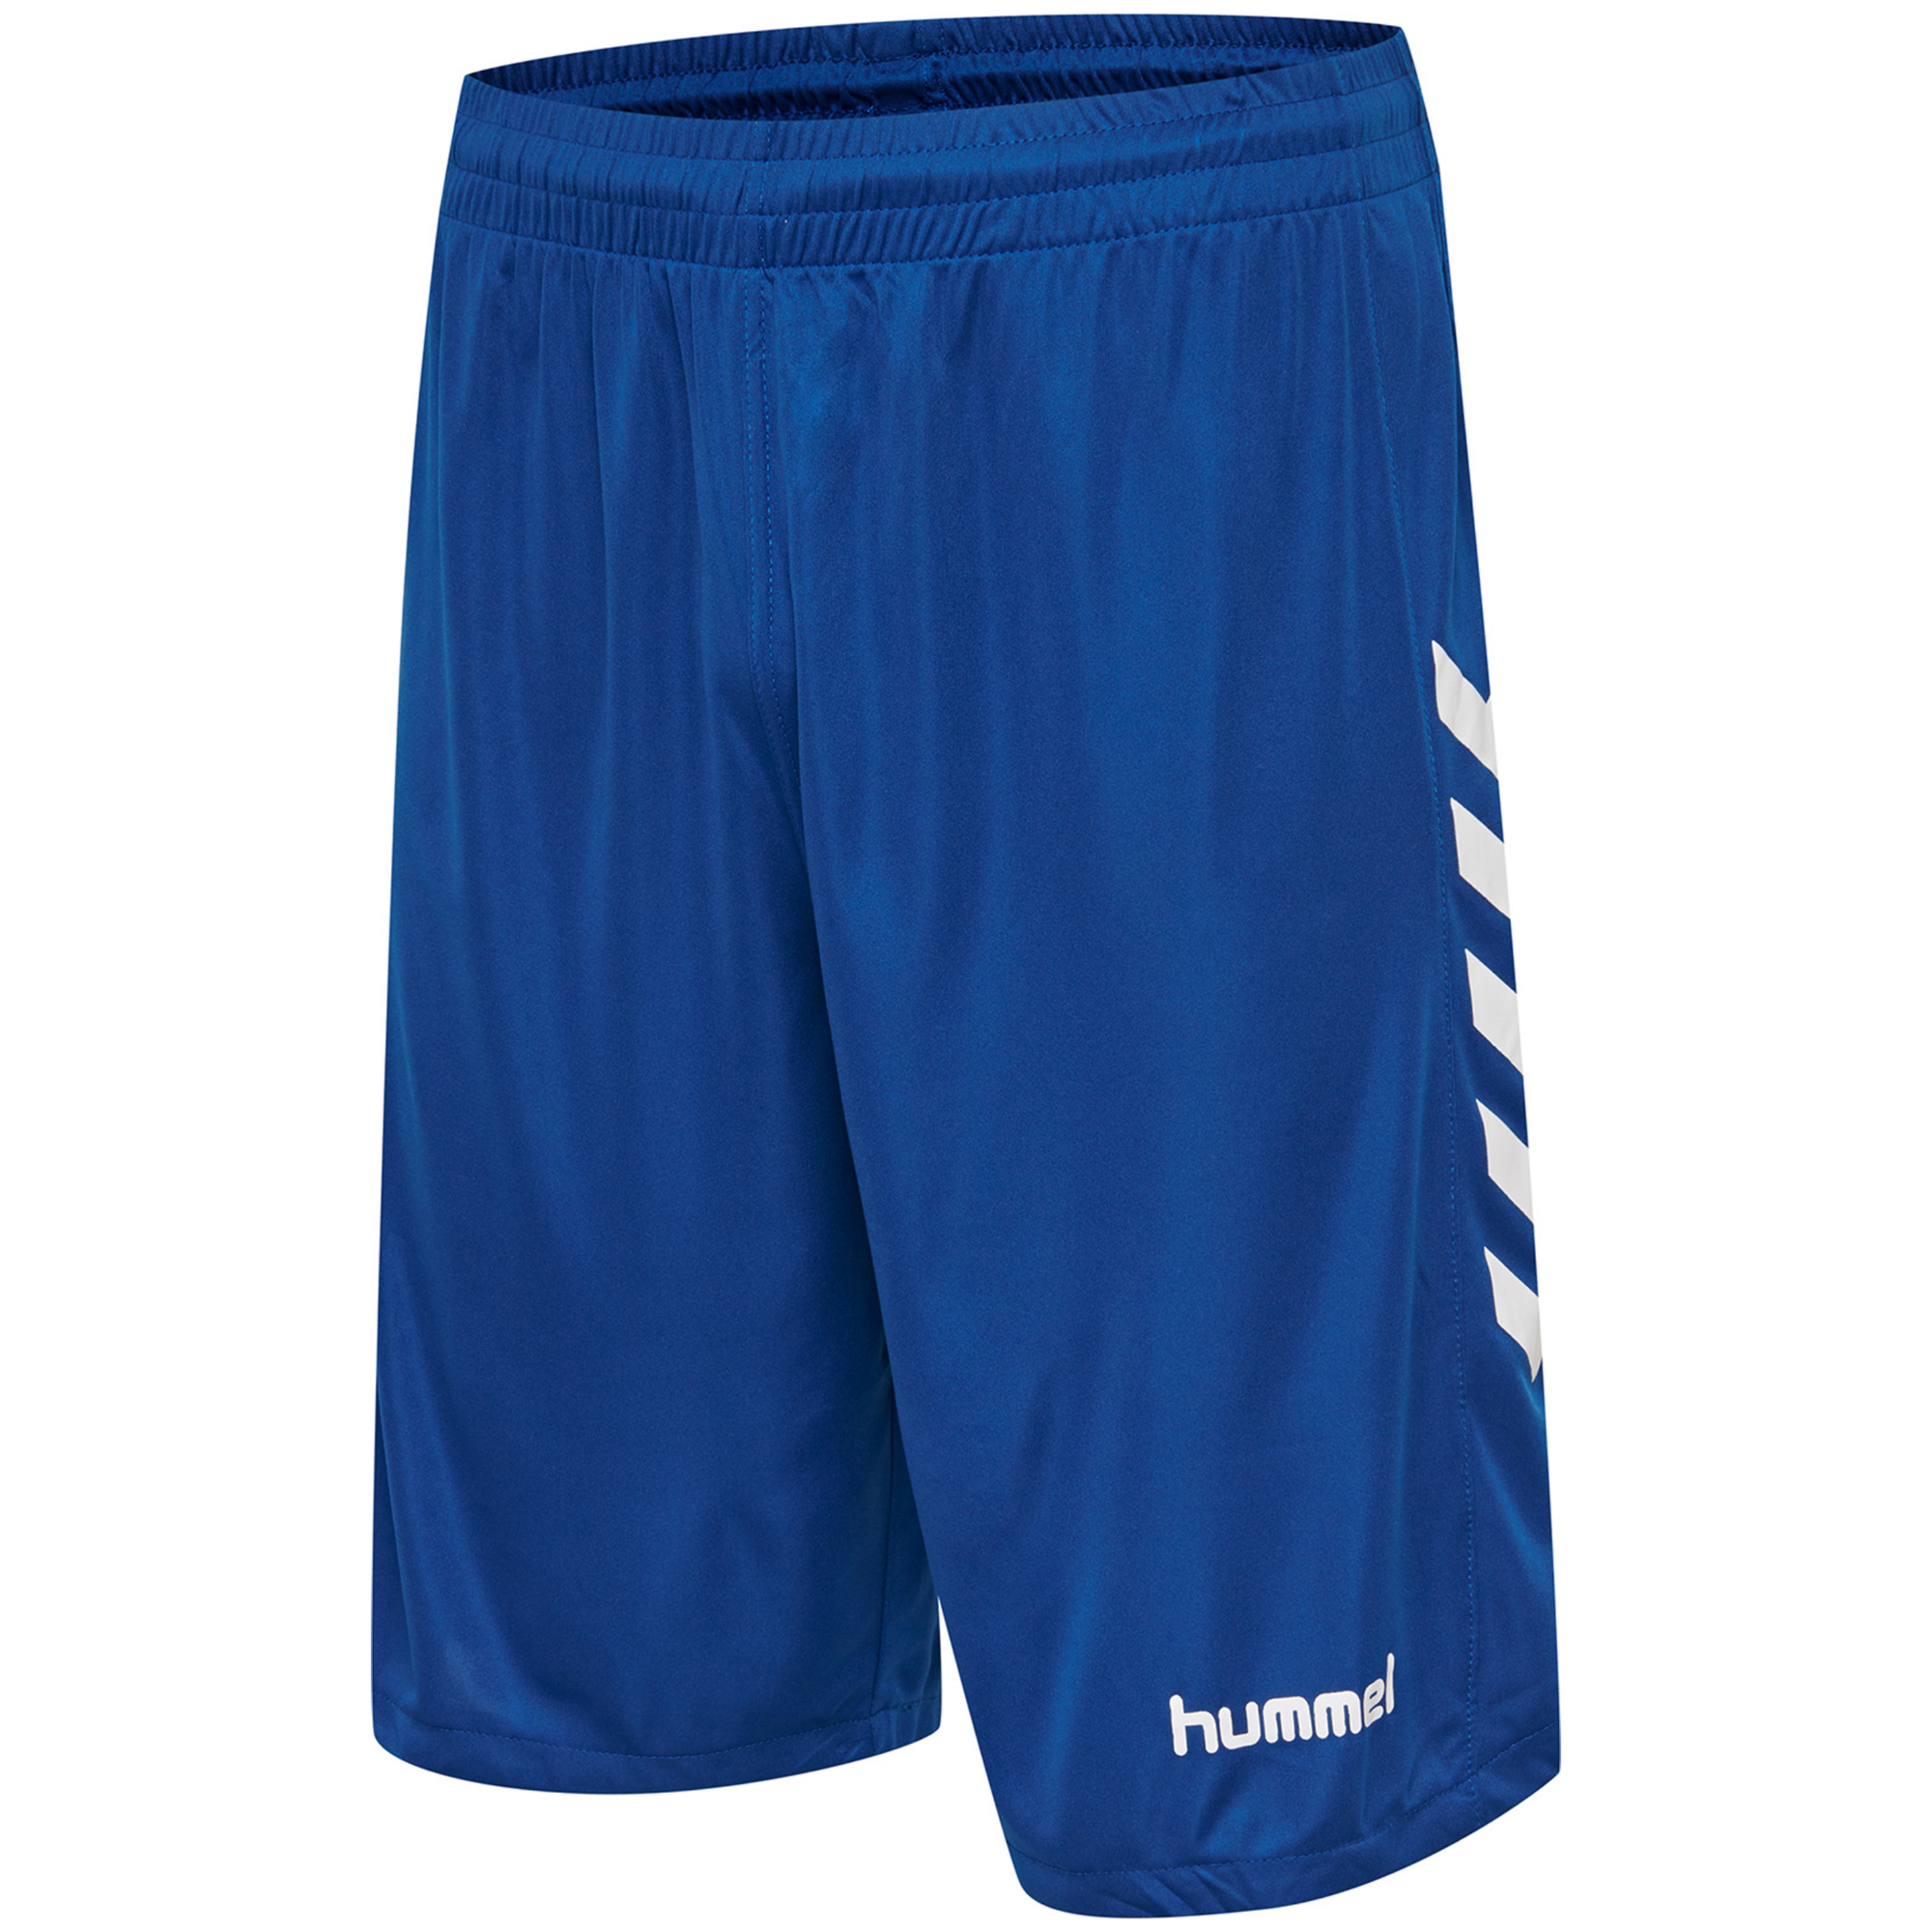 Pantalón Basket Hummel - azul - 